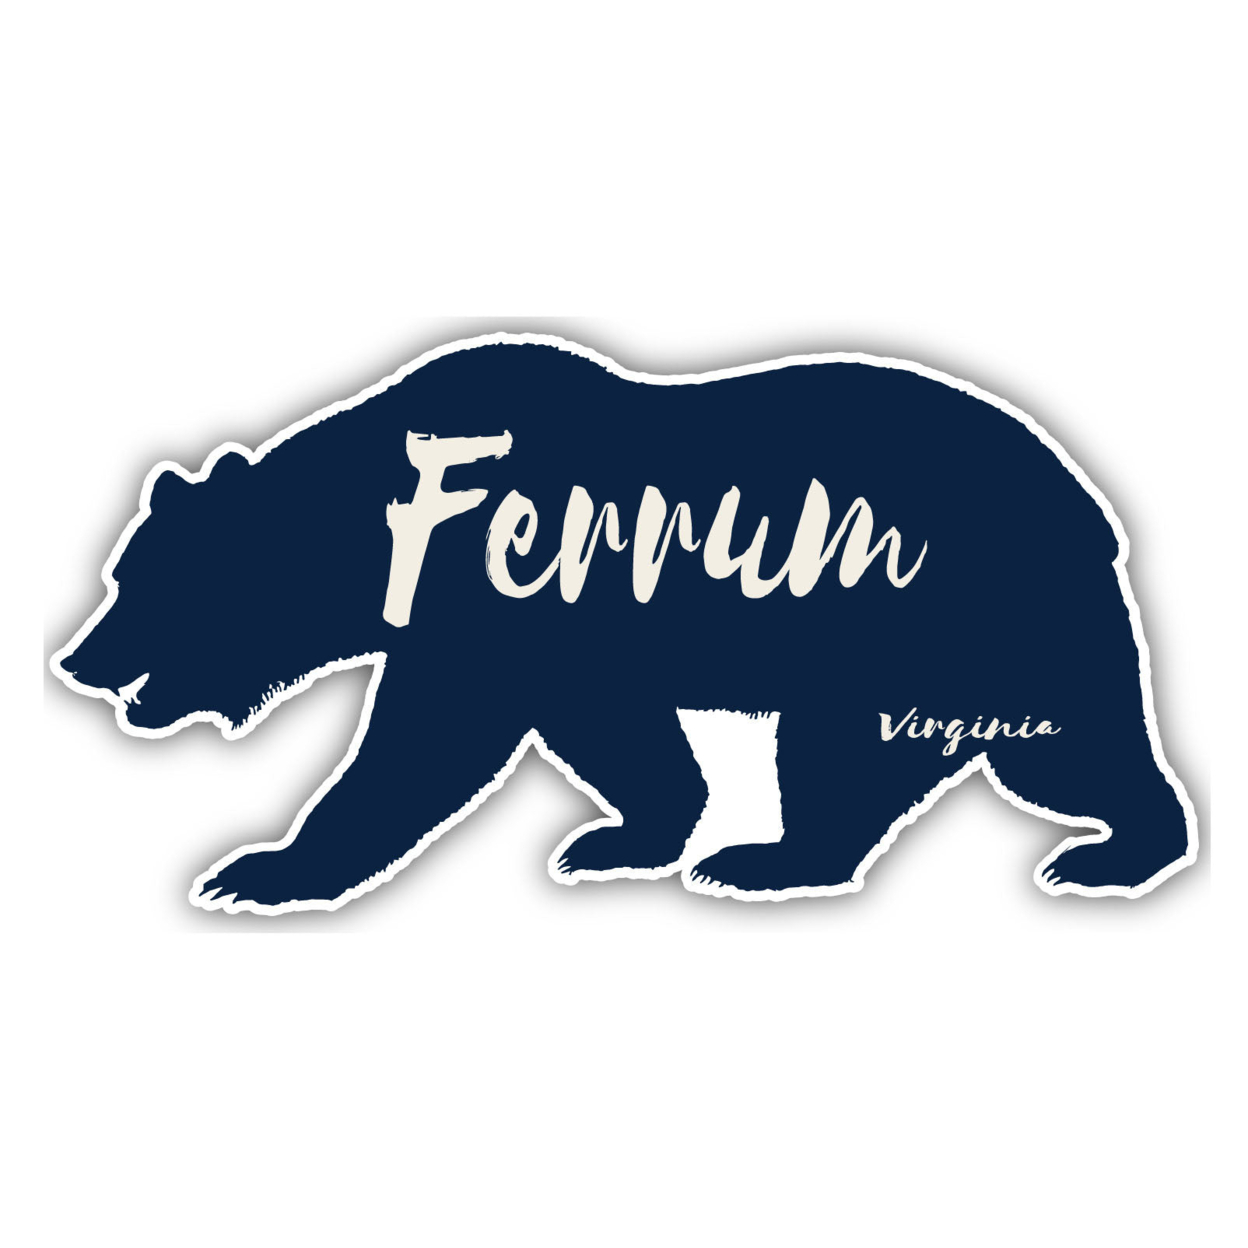 Ferrum Virginia Souvenir Decorative Stickers (Choose Theme And Size) - 4-Pack, 4-Inch, Bear